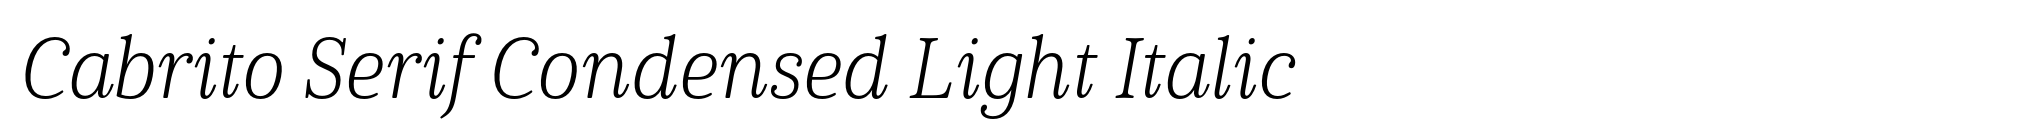 Cabrito Serif Condensed Light Italic image